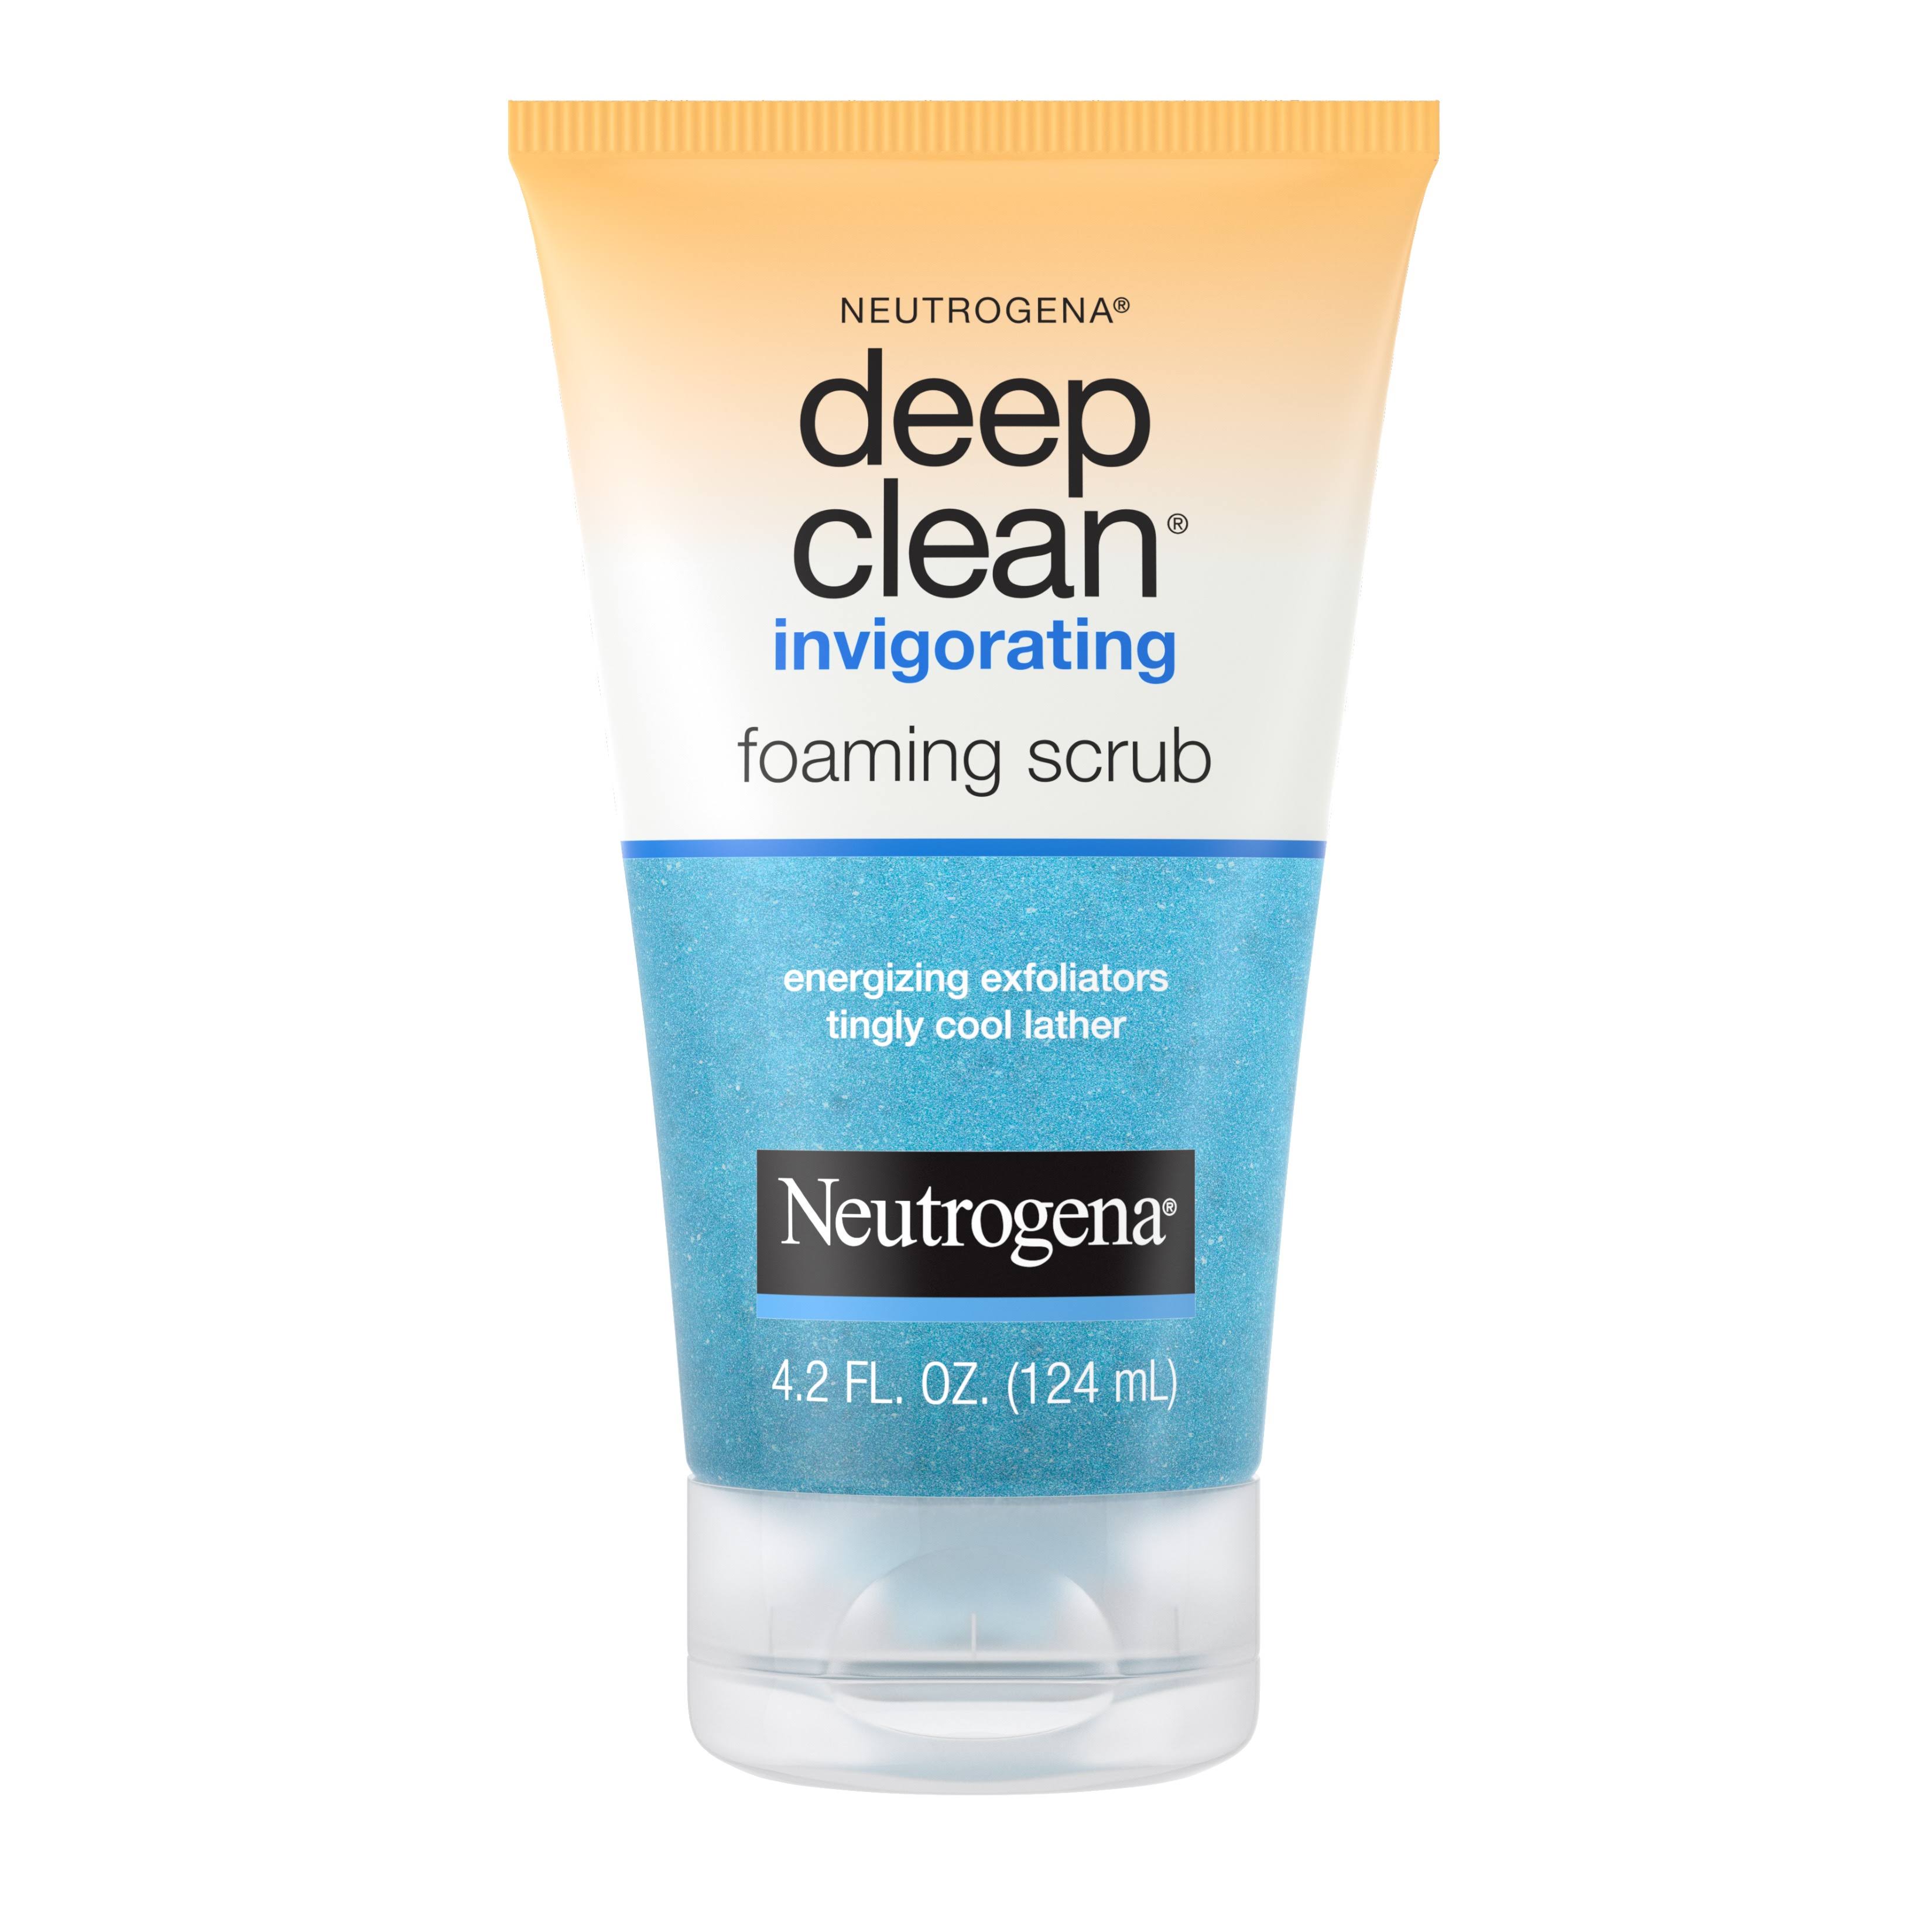 Neutrogena Deep Clean Invigorating Foaming Scrub - 4.2 fl oz